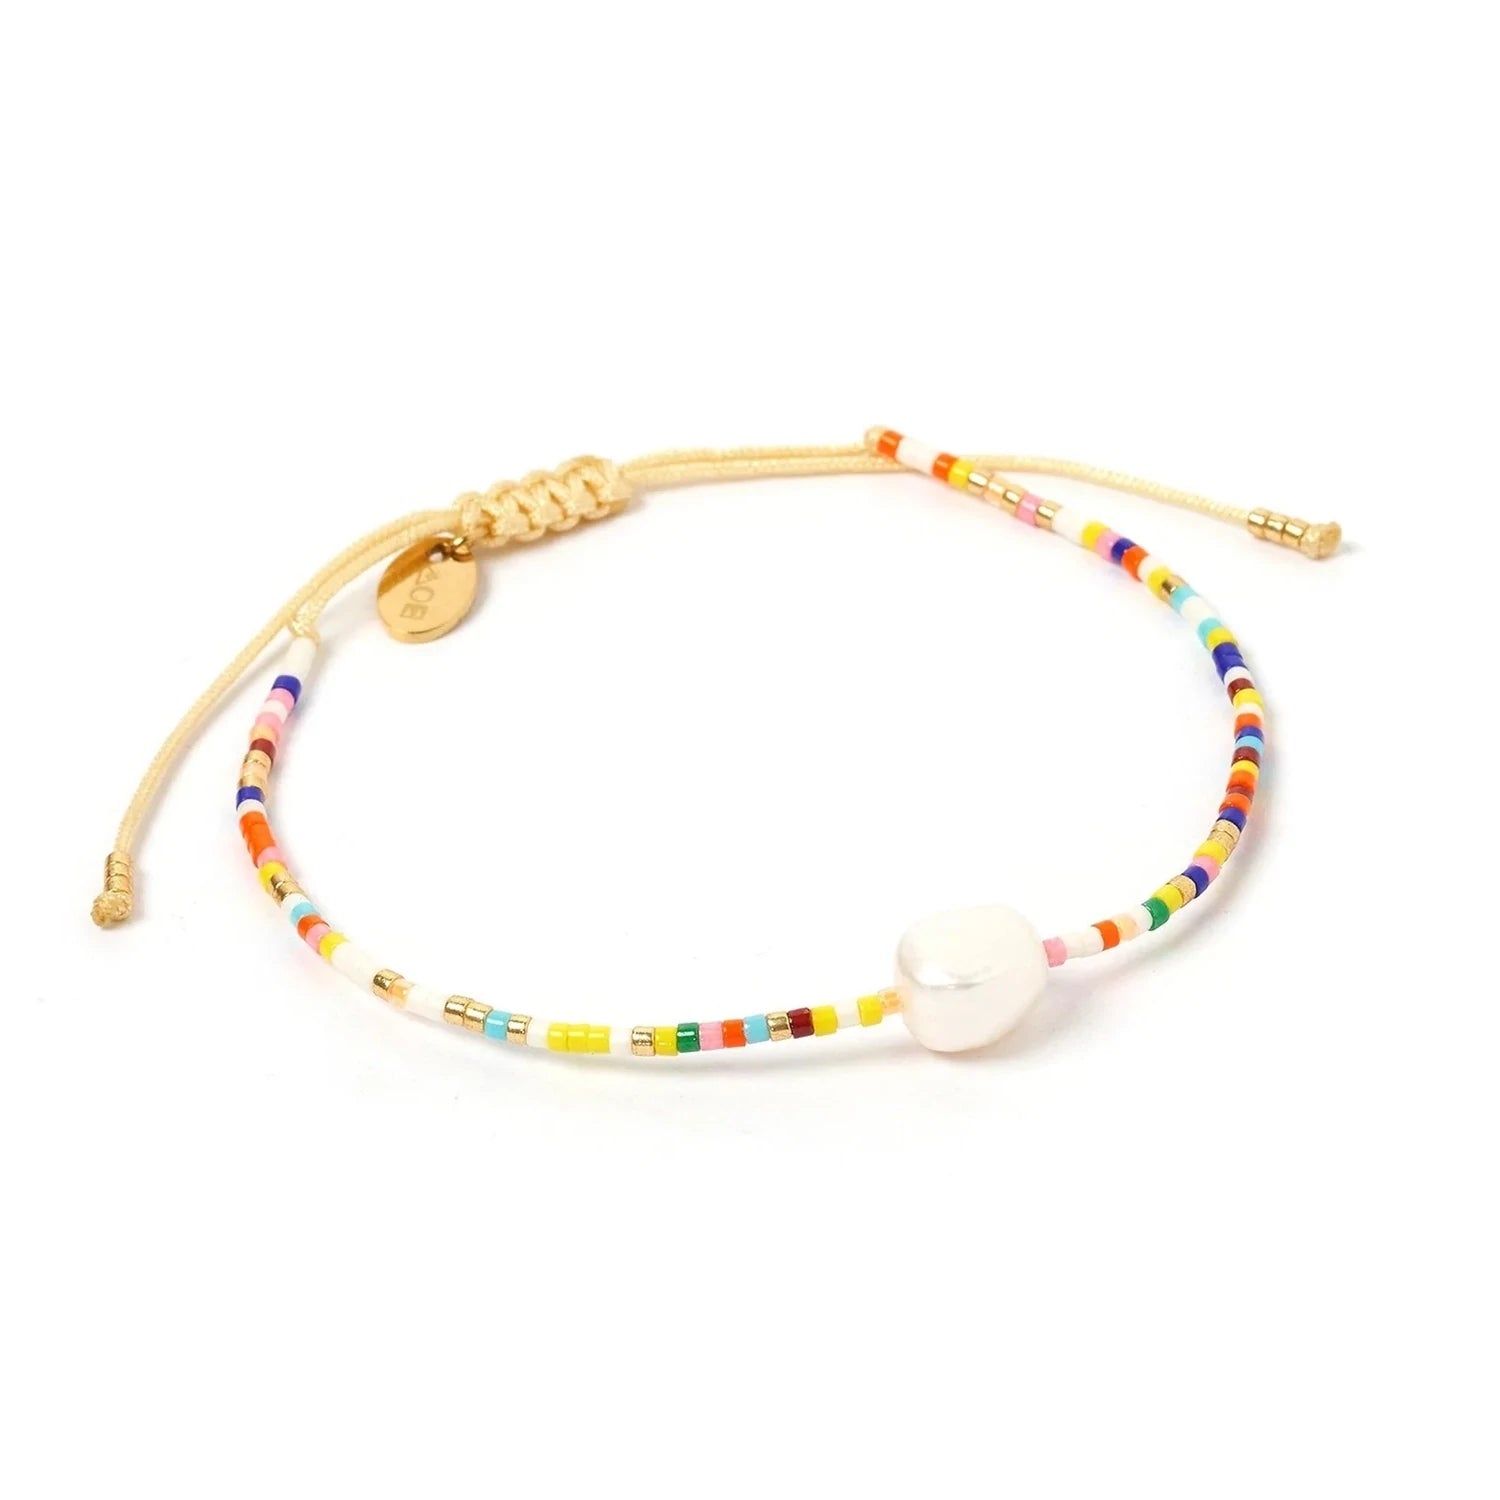 Marley Gold/Pearl Bracelet